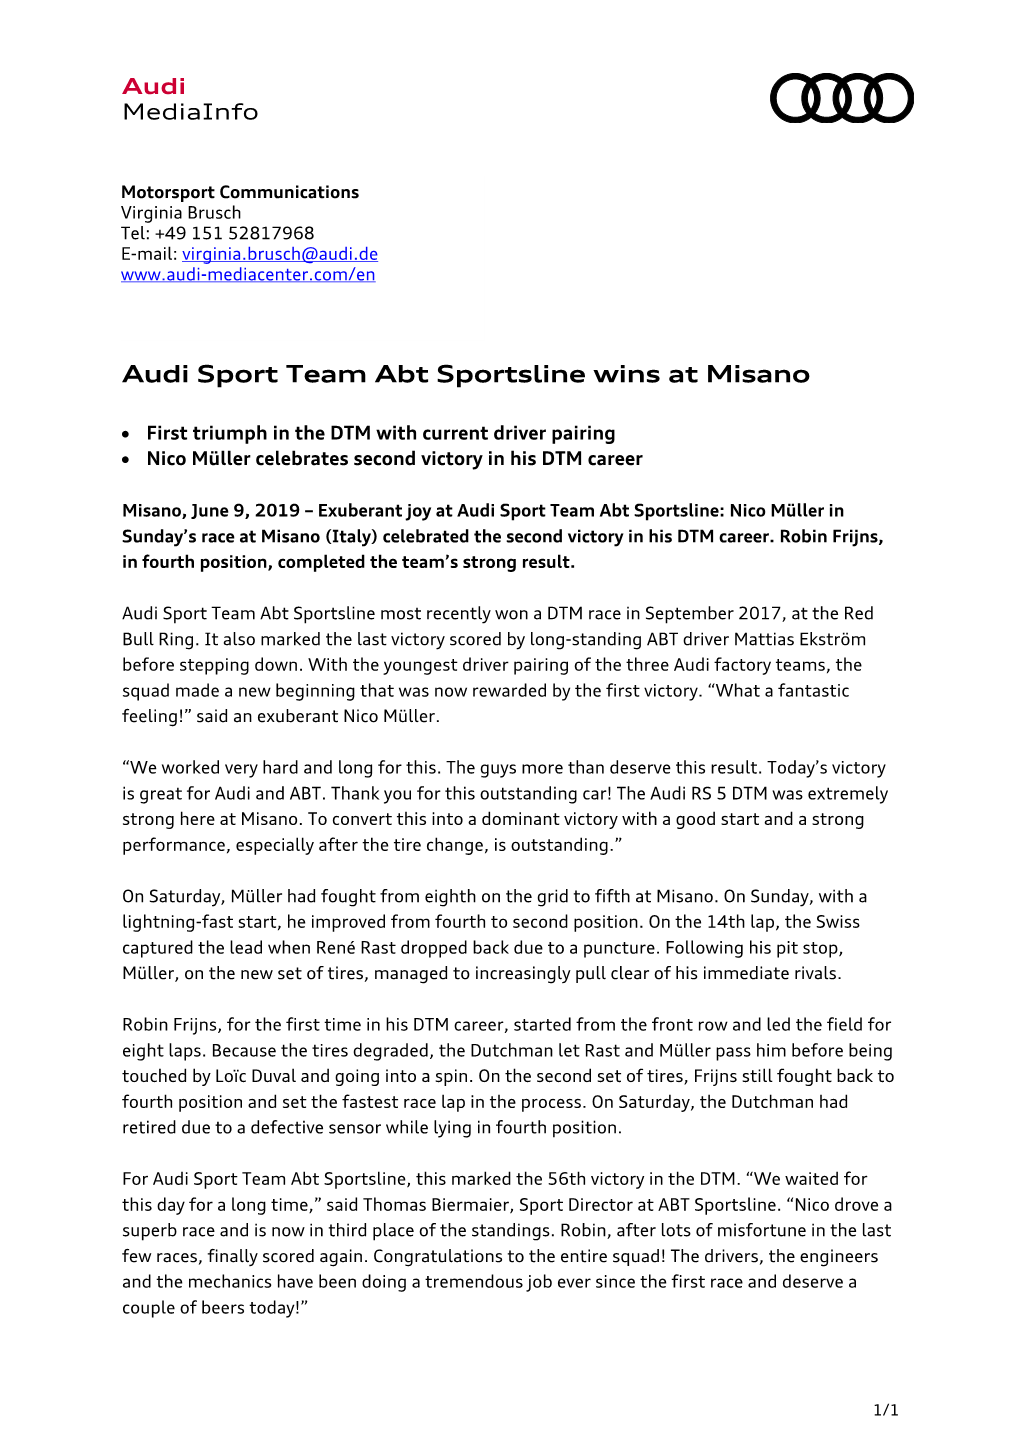 Audi Sport Team Abt Sportsline Wins at Misano